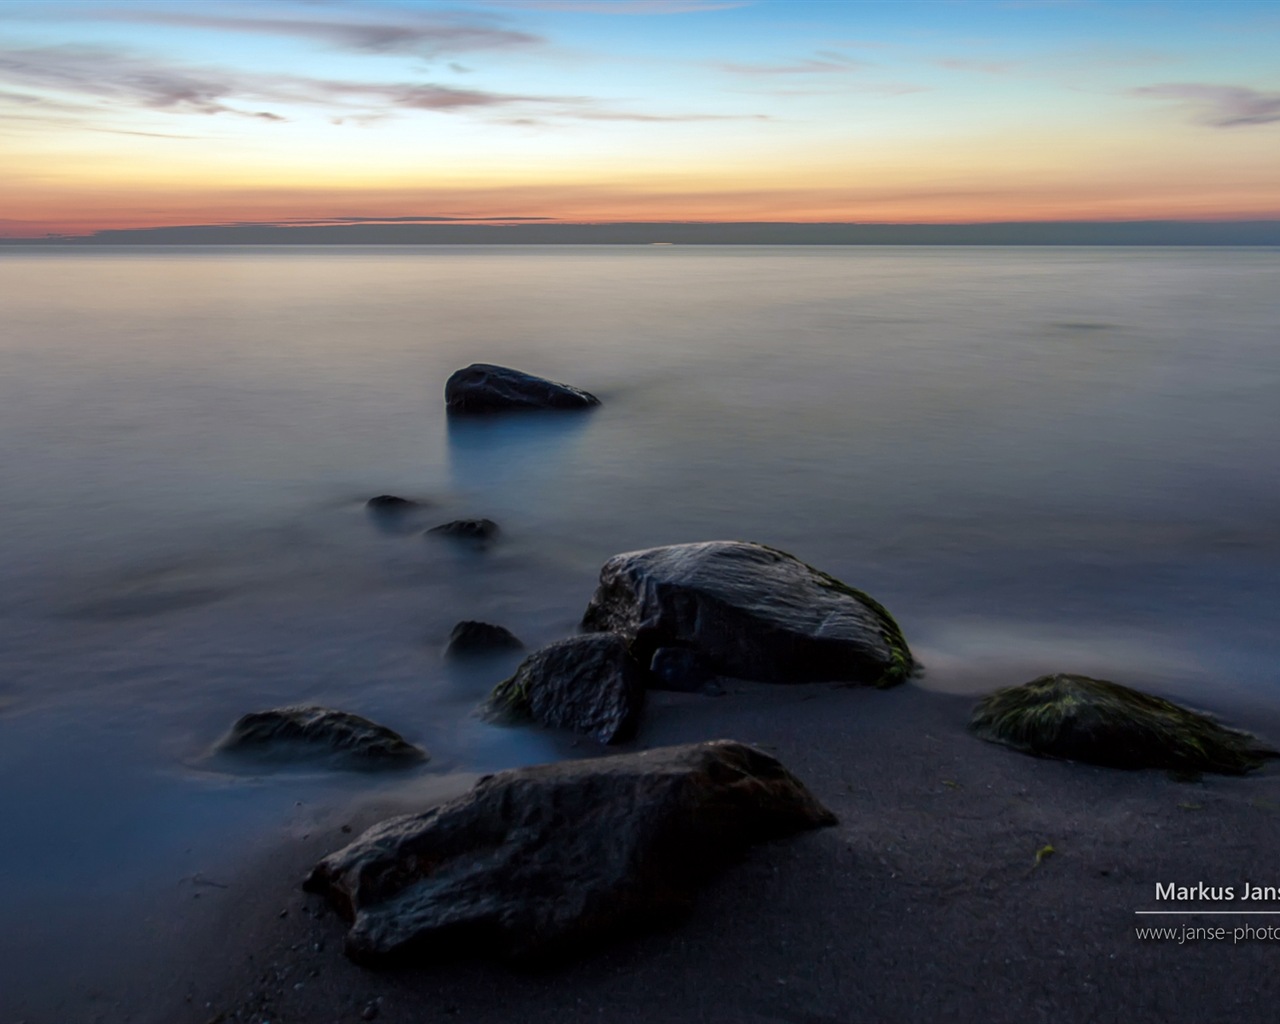 Beautiful coastal scenery in Germany, Windows 8 HD wallpapers #2 - 1280x1024